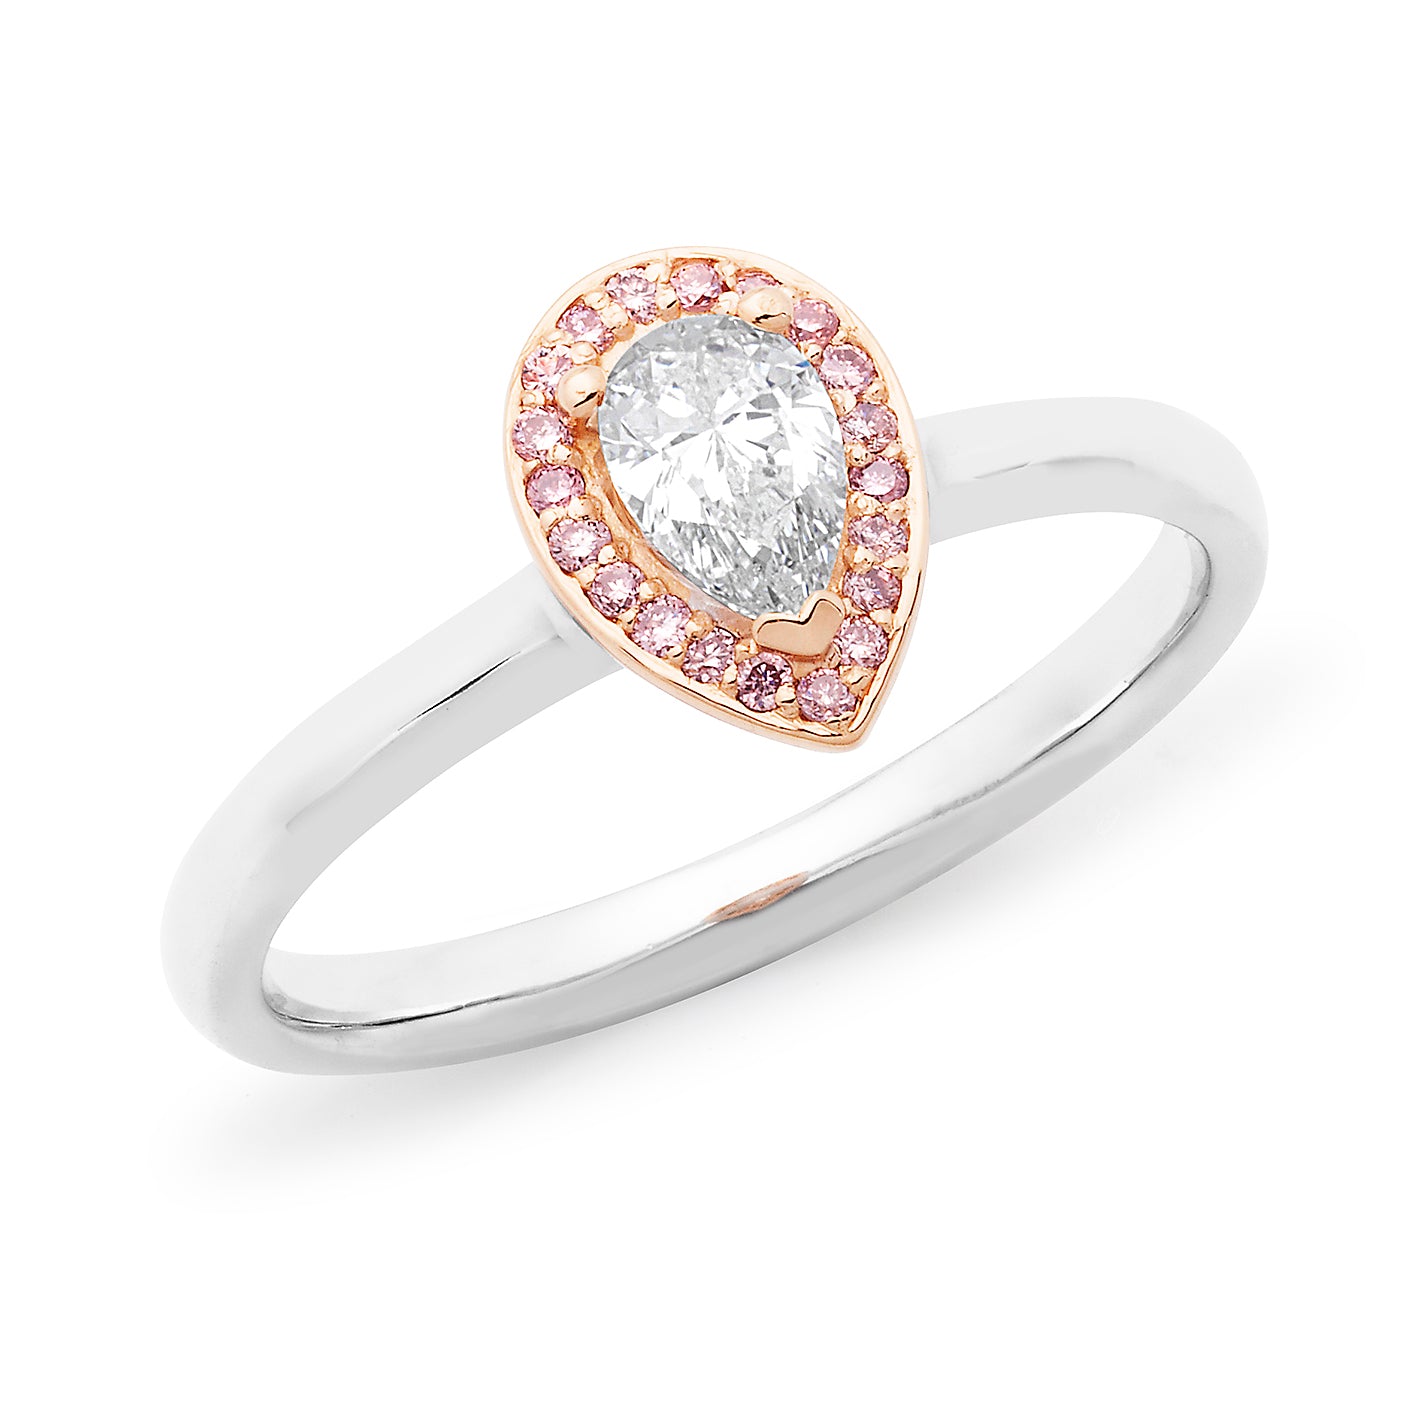 18ct White Gold Diamond Claw/Bead Set Ring, Pink Caviar